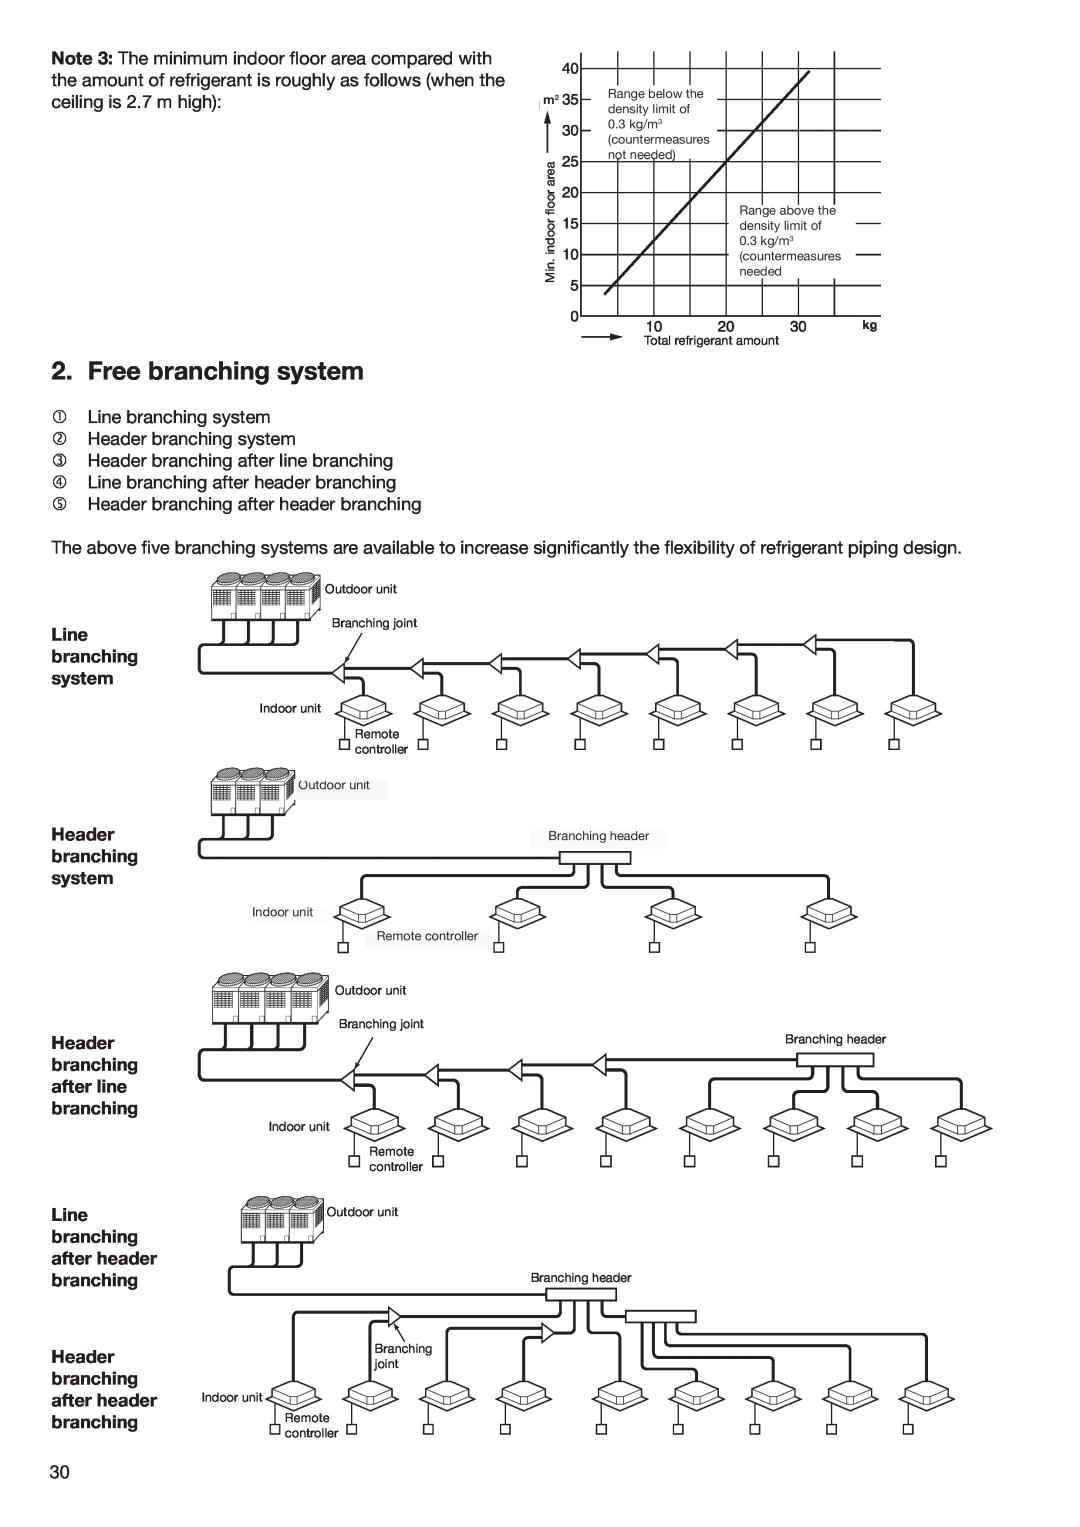 Toshiba HFC R-410A manual Free branching system, Line branching system Header branching system 